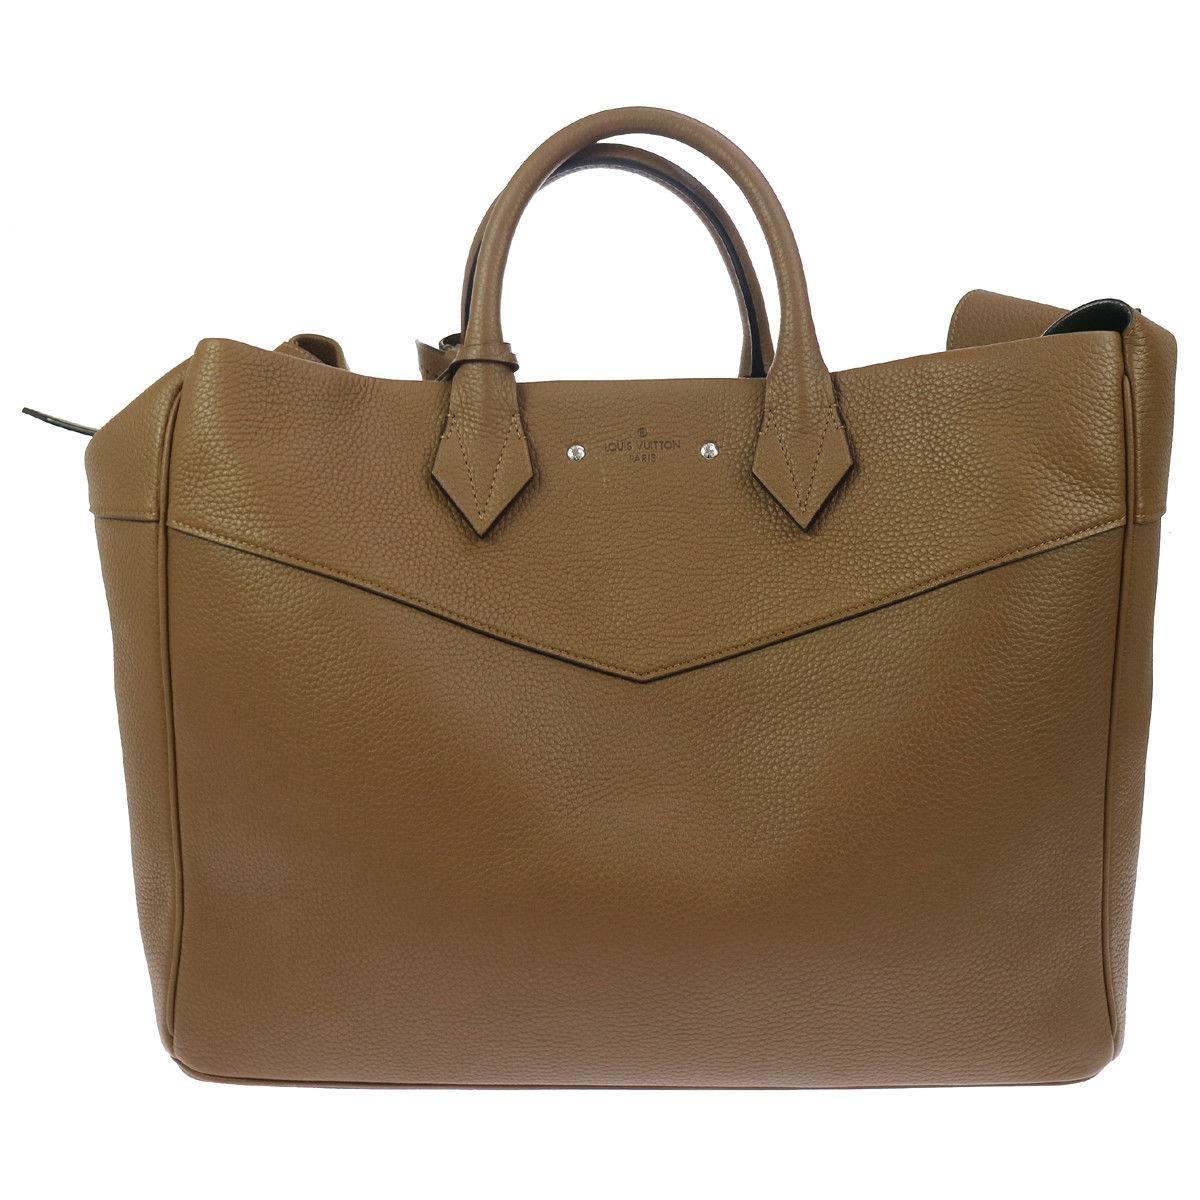 Louis Vuitton New Cognac Leather Travel Carryall Top Handle Bag